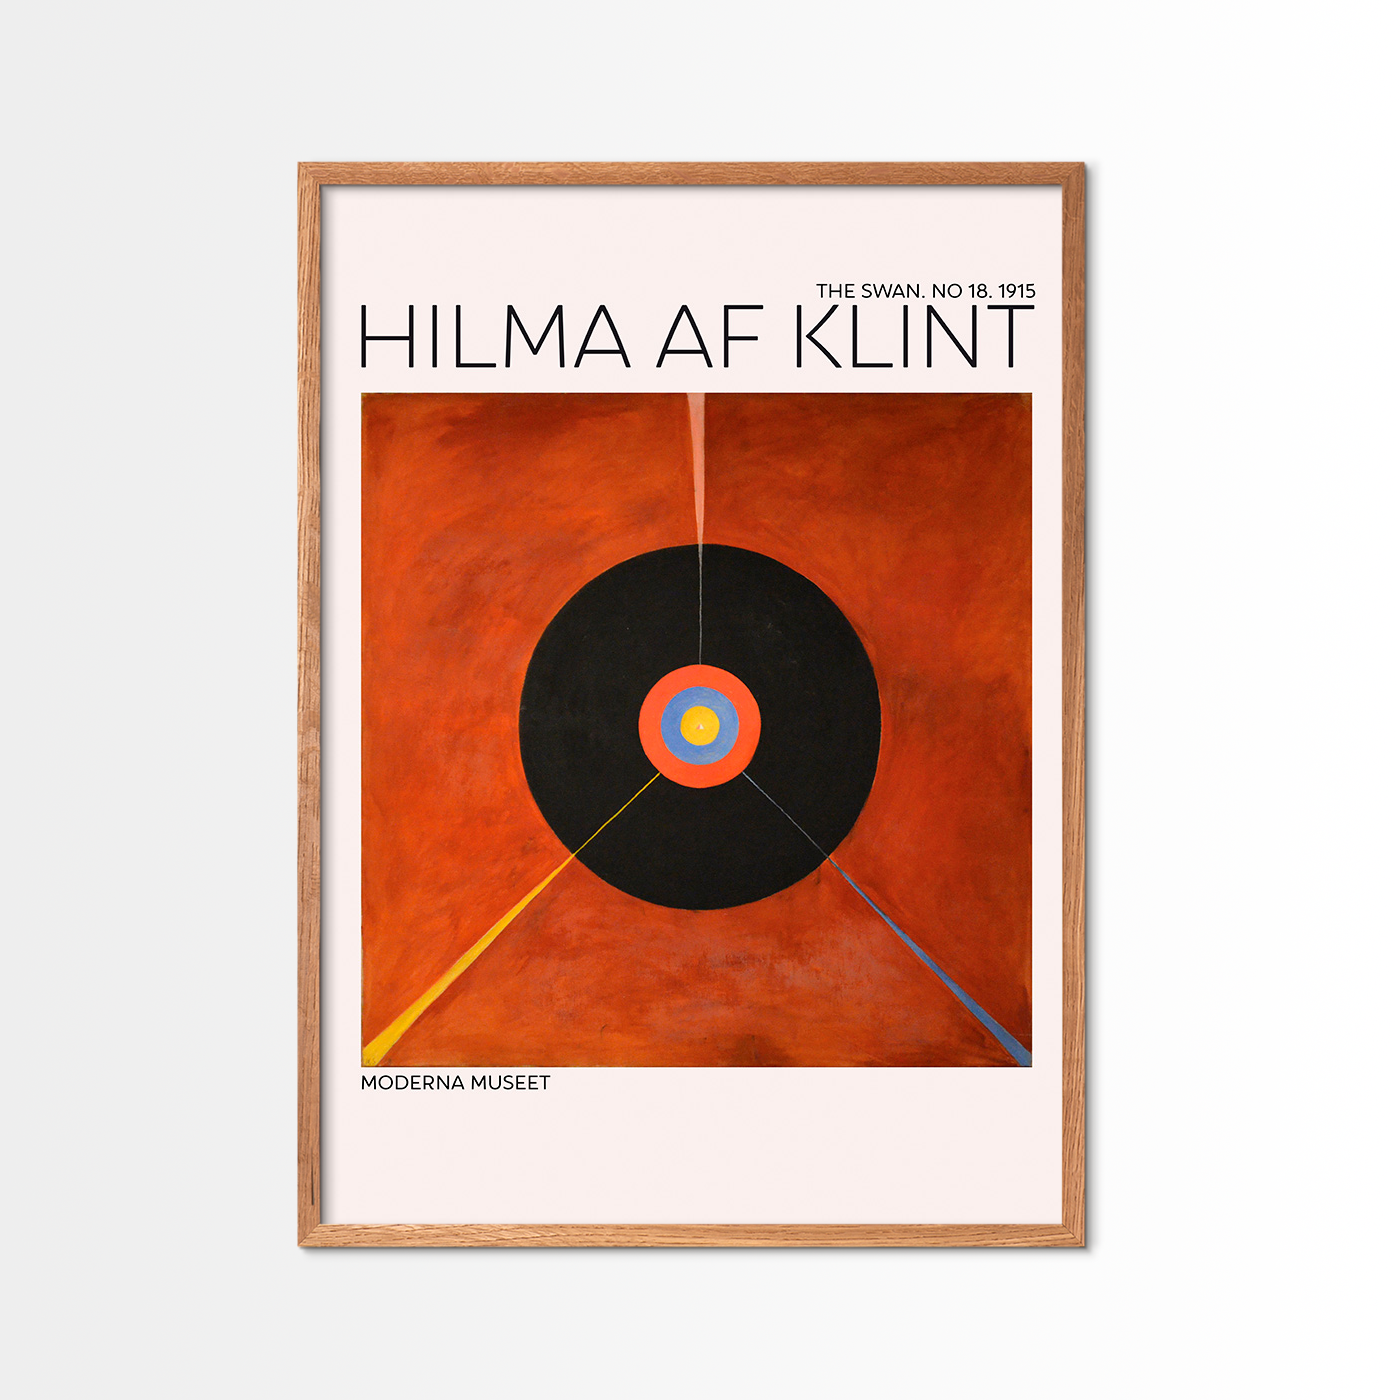 The Swan No. 18 Hilma Of Klint